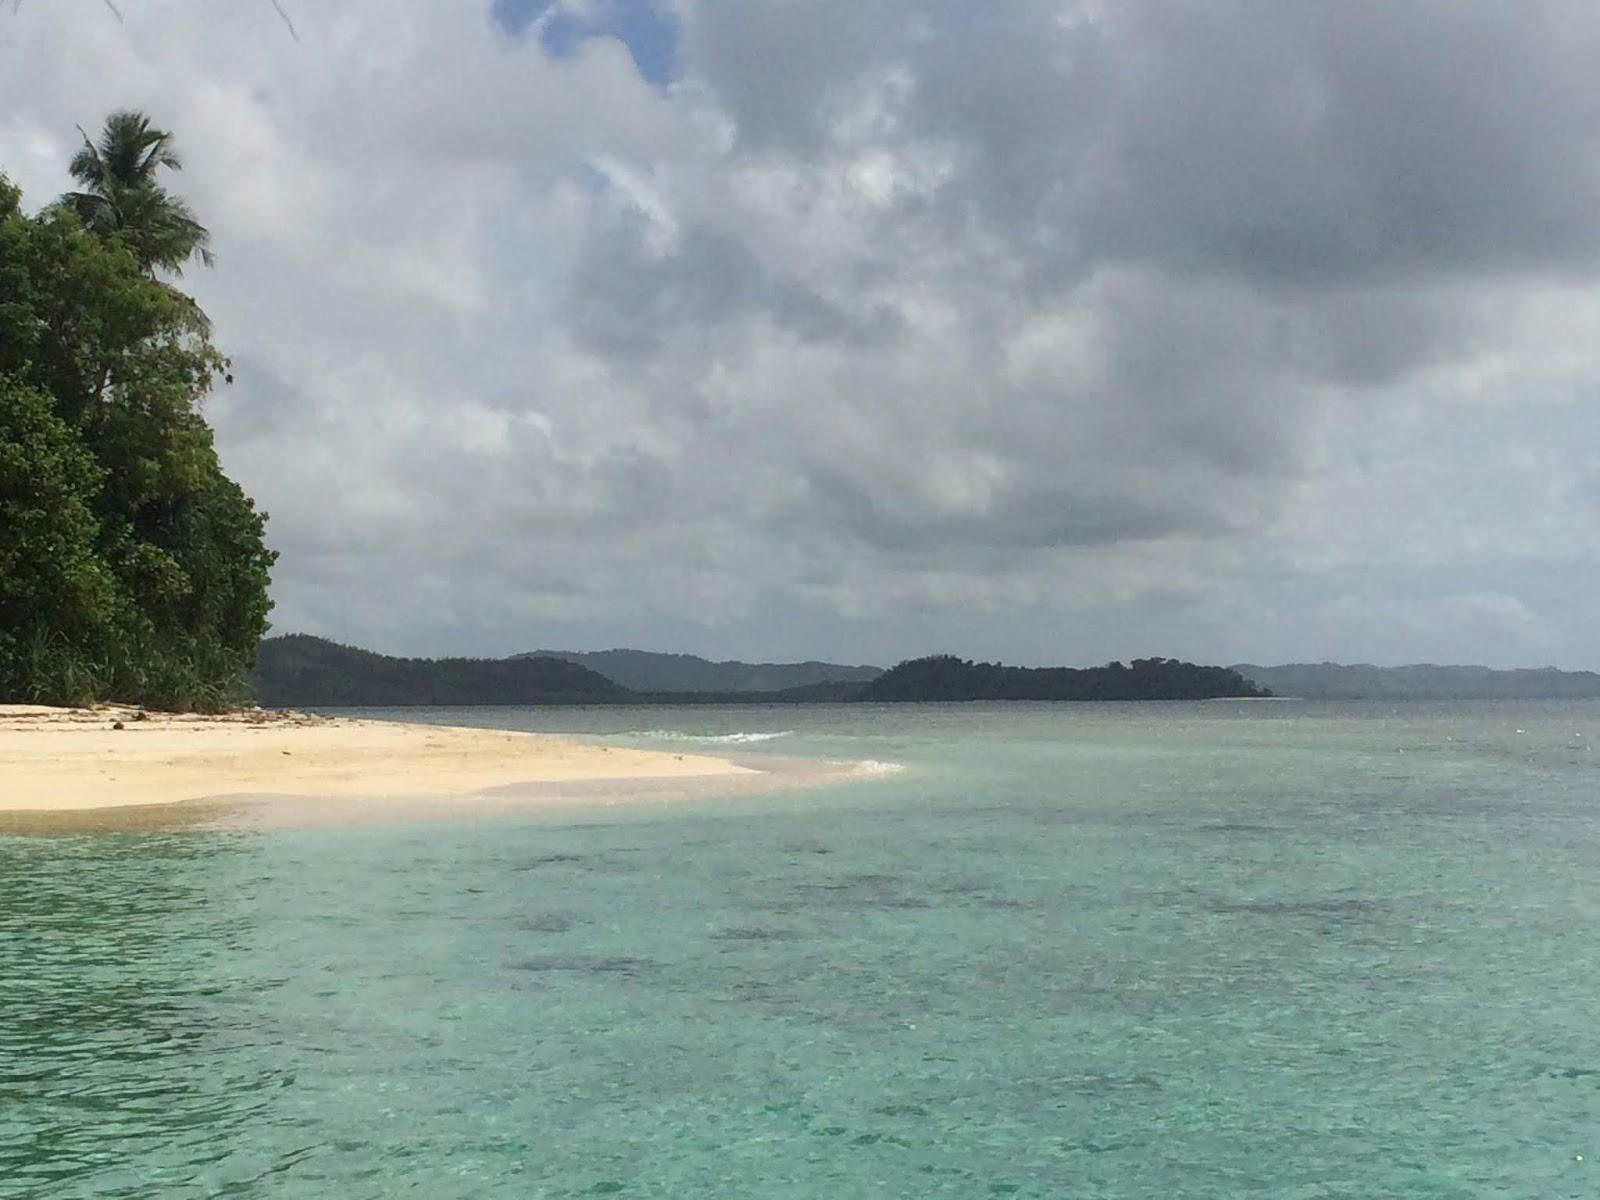 Renambacan海滩的照片 带有碧绿色纯水表面